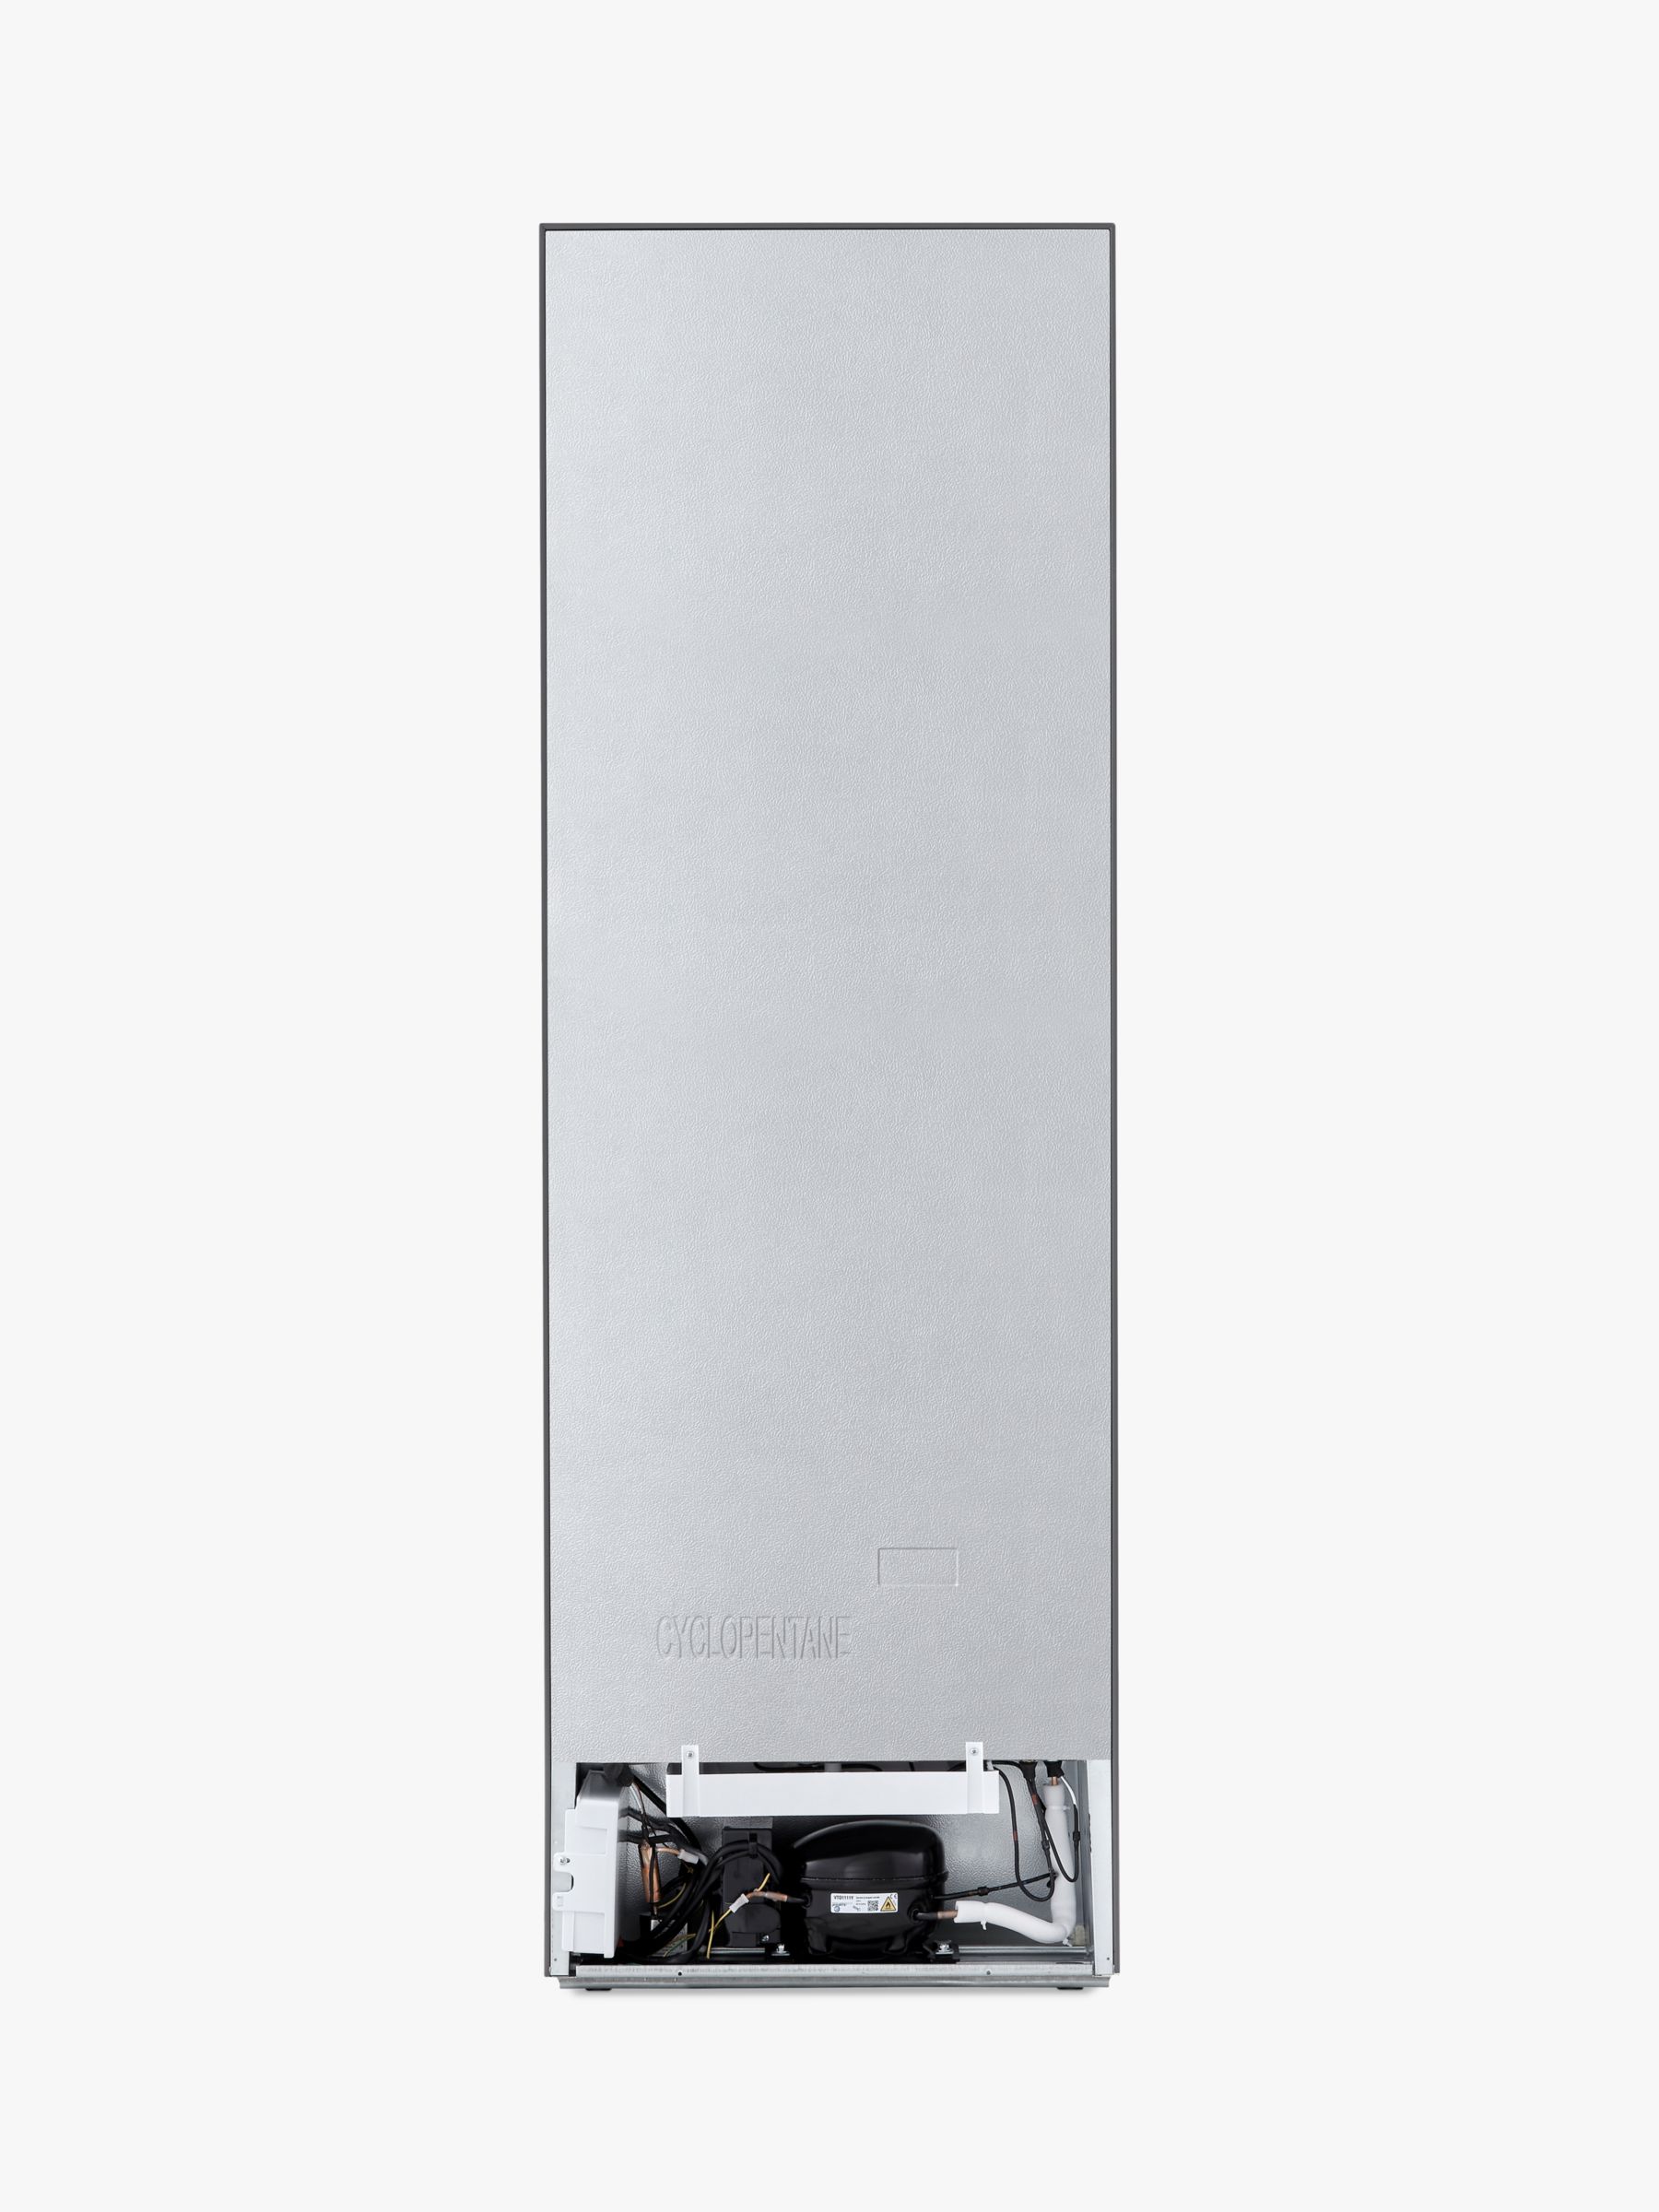 LG GBM22HSADH Freestanding 70/30 Fridge Freezer, Silver